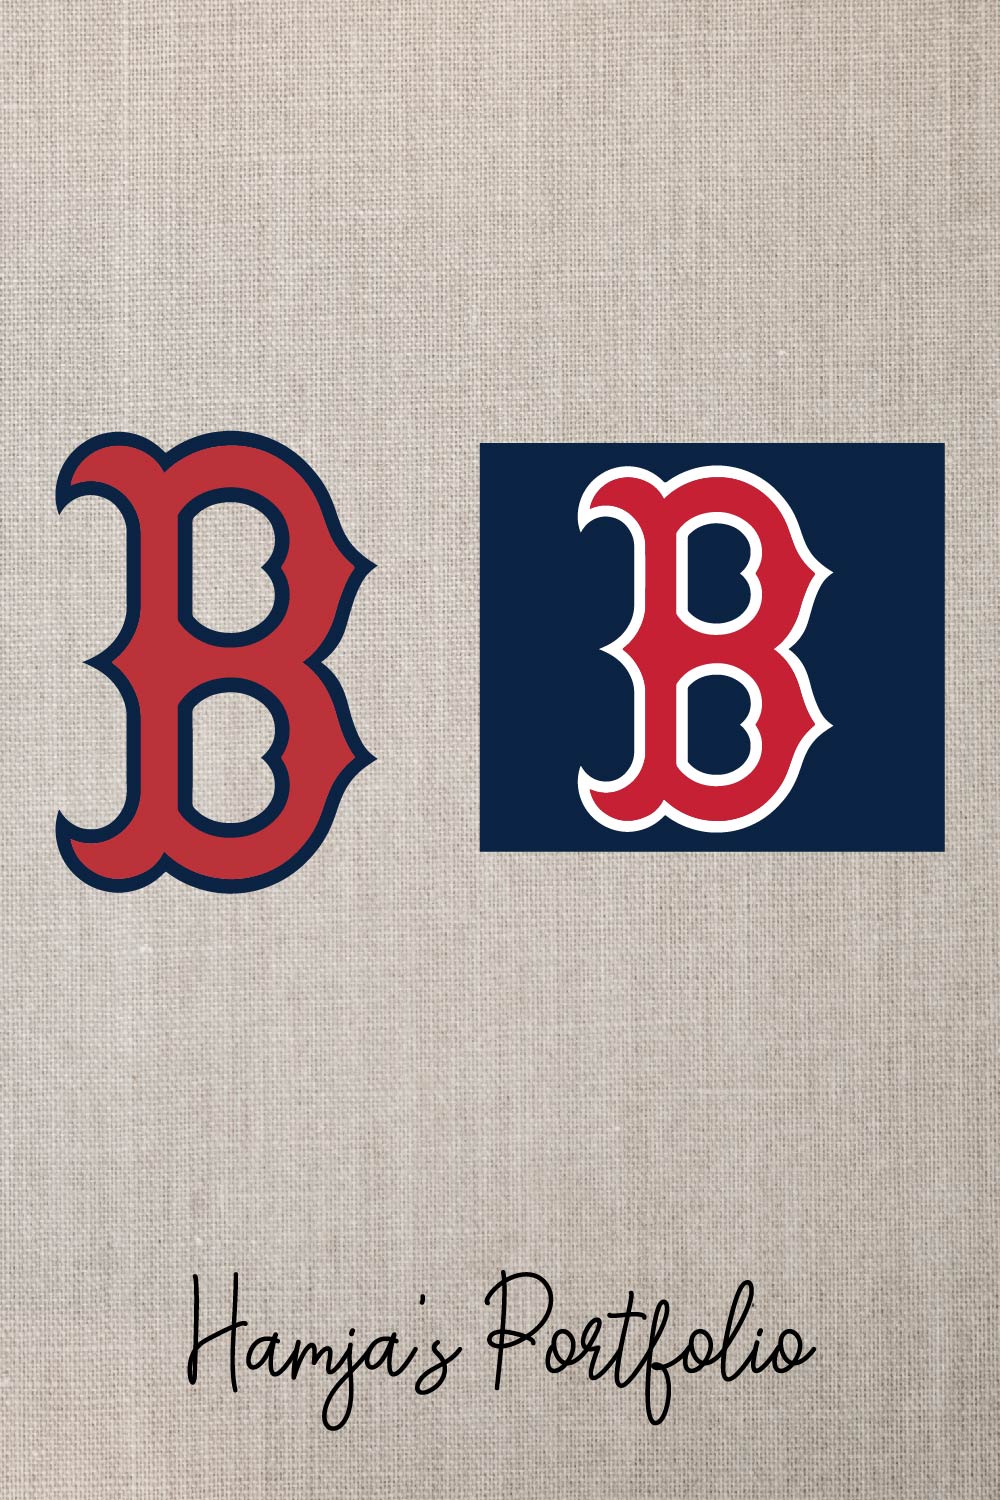 Boston Red Sox Logo Vector Set pinterest preview image.